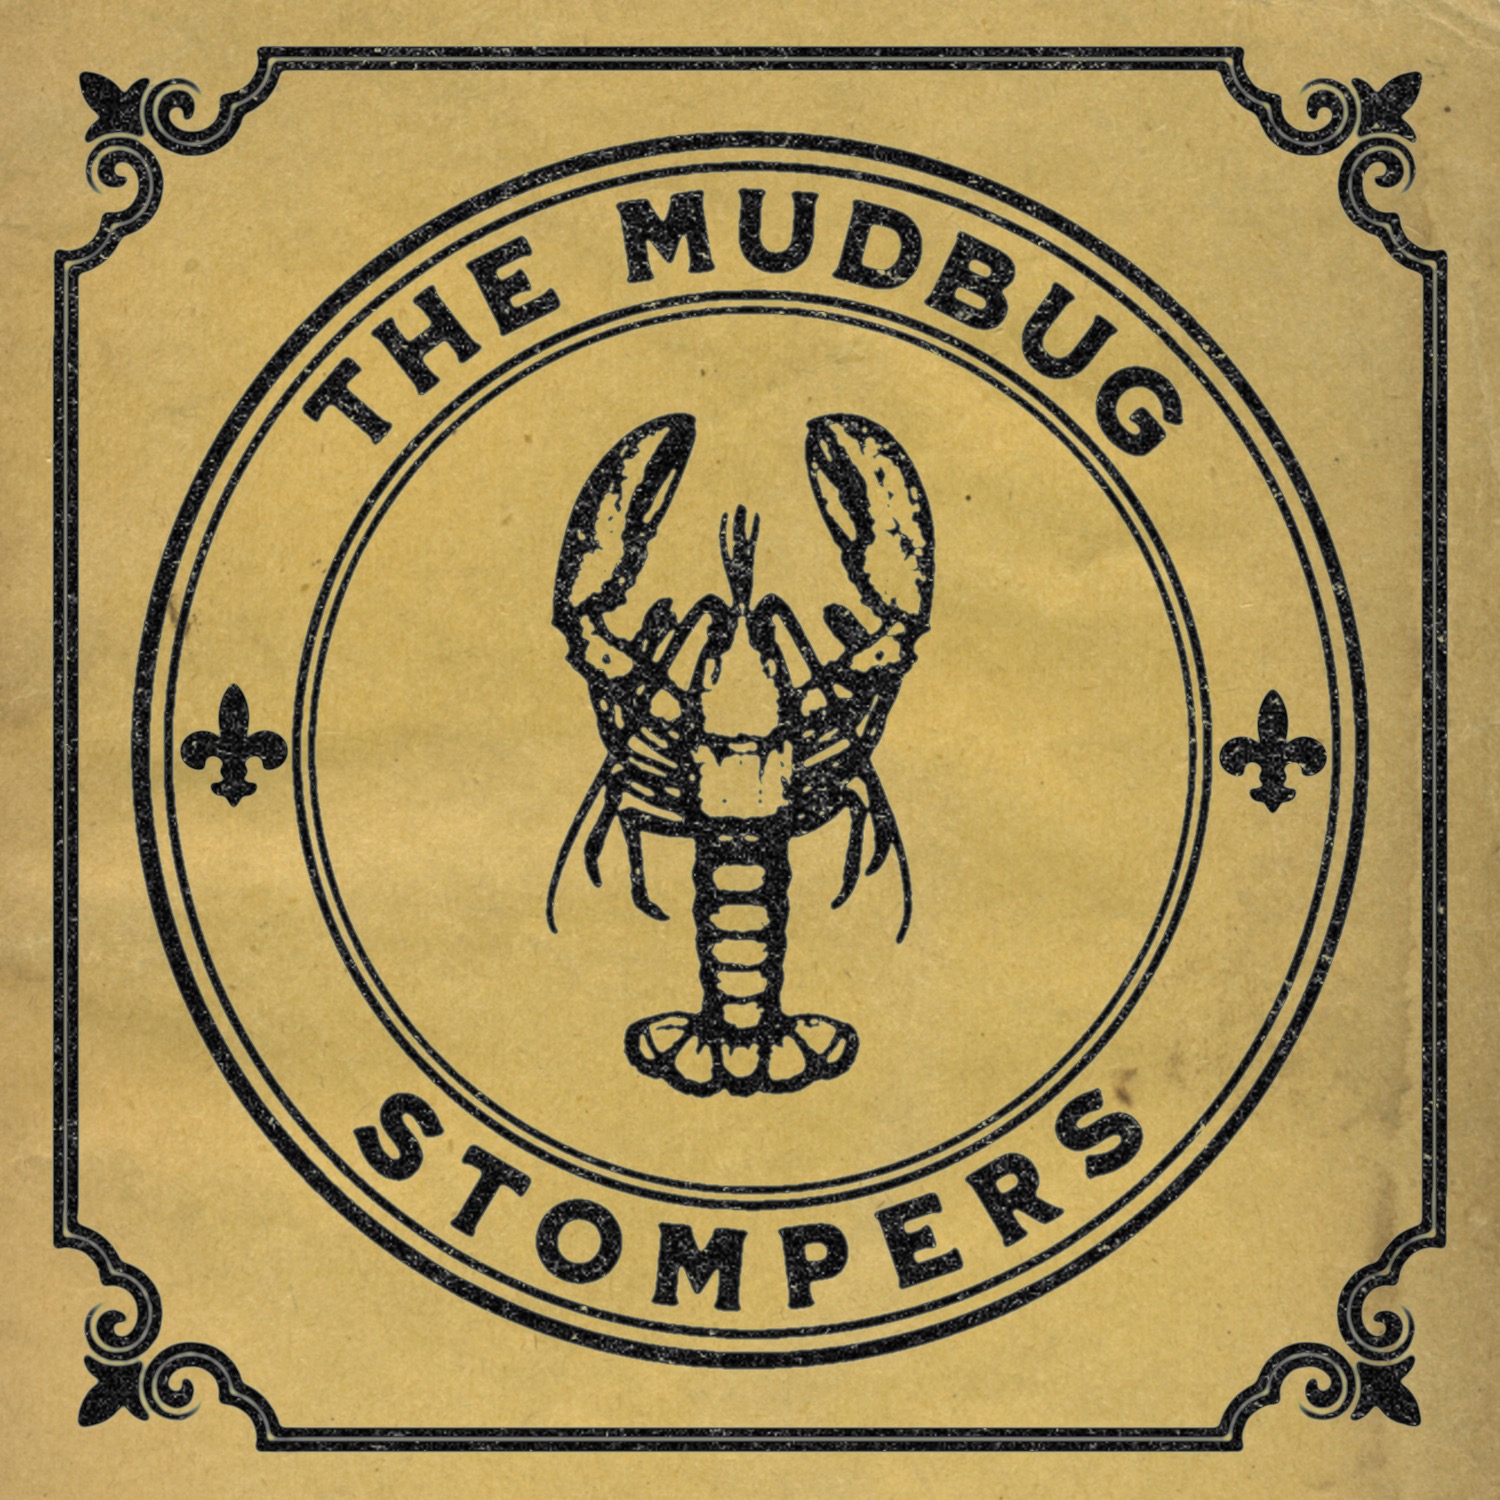  The Mudbug Stompers